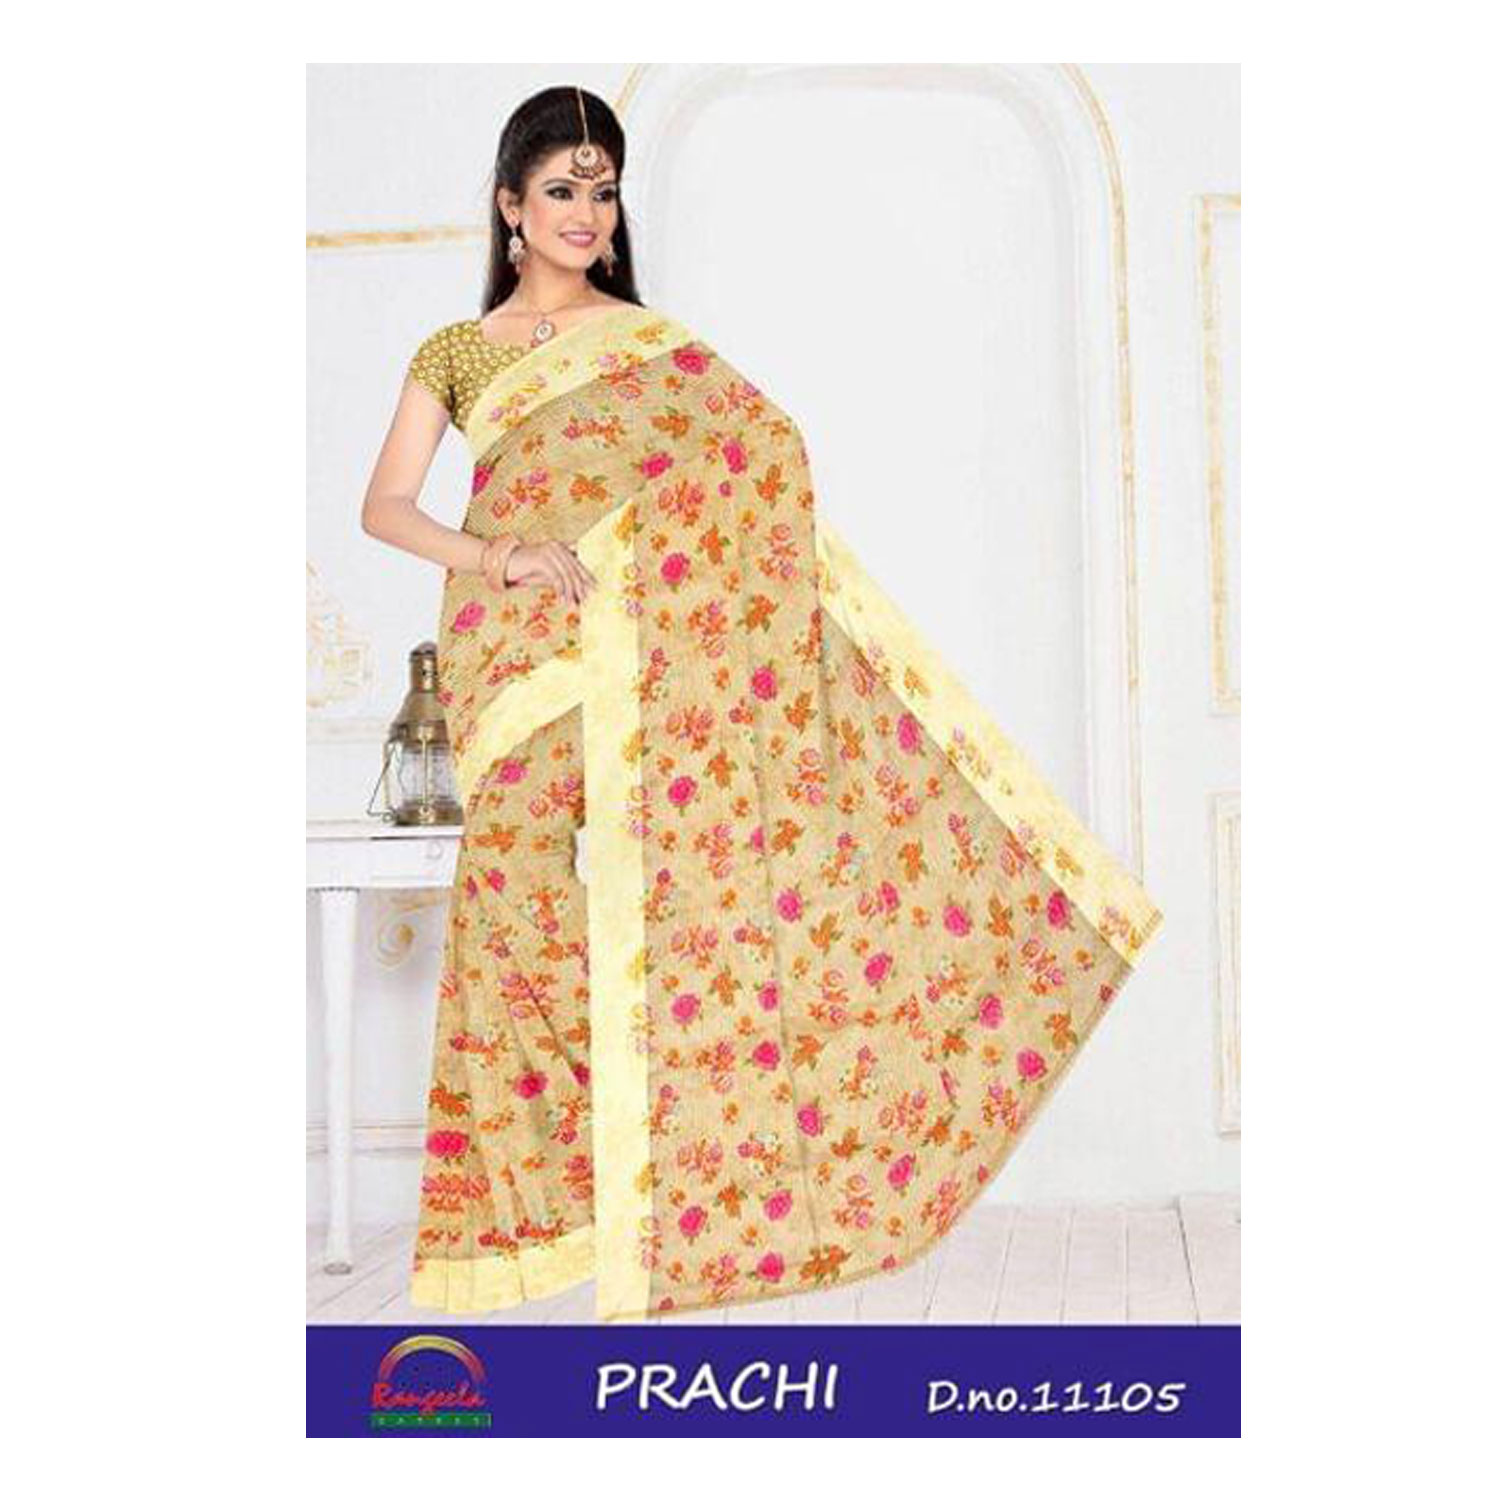 RANGEELA Women's Varly Checks Prachi Saree |D.No - 11105 | Pack of 8